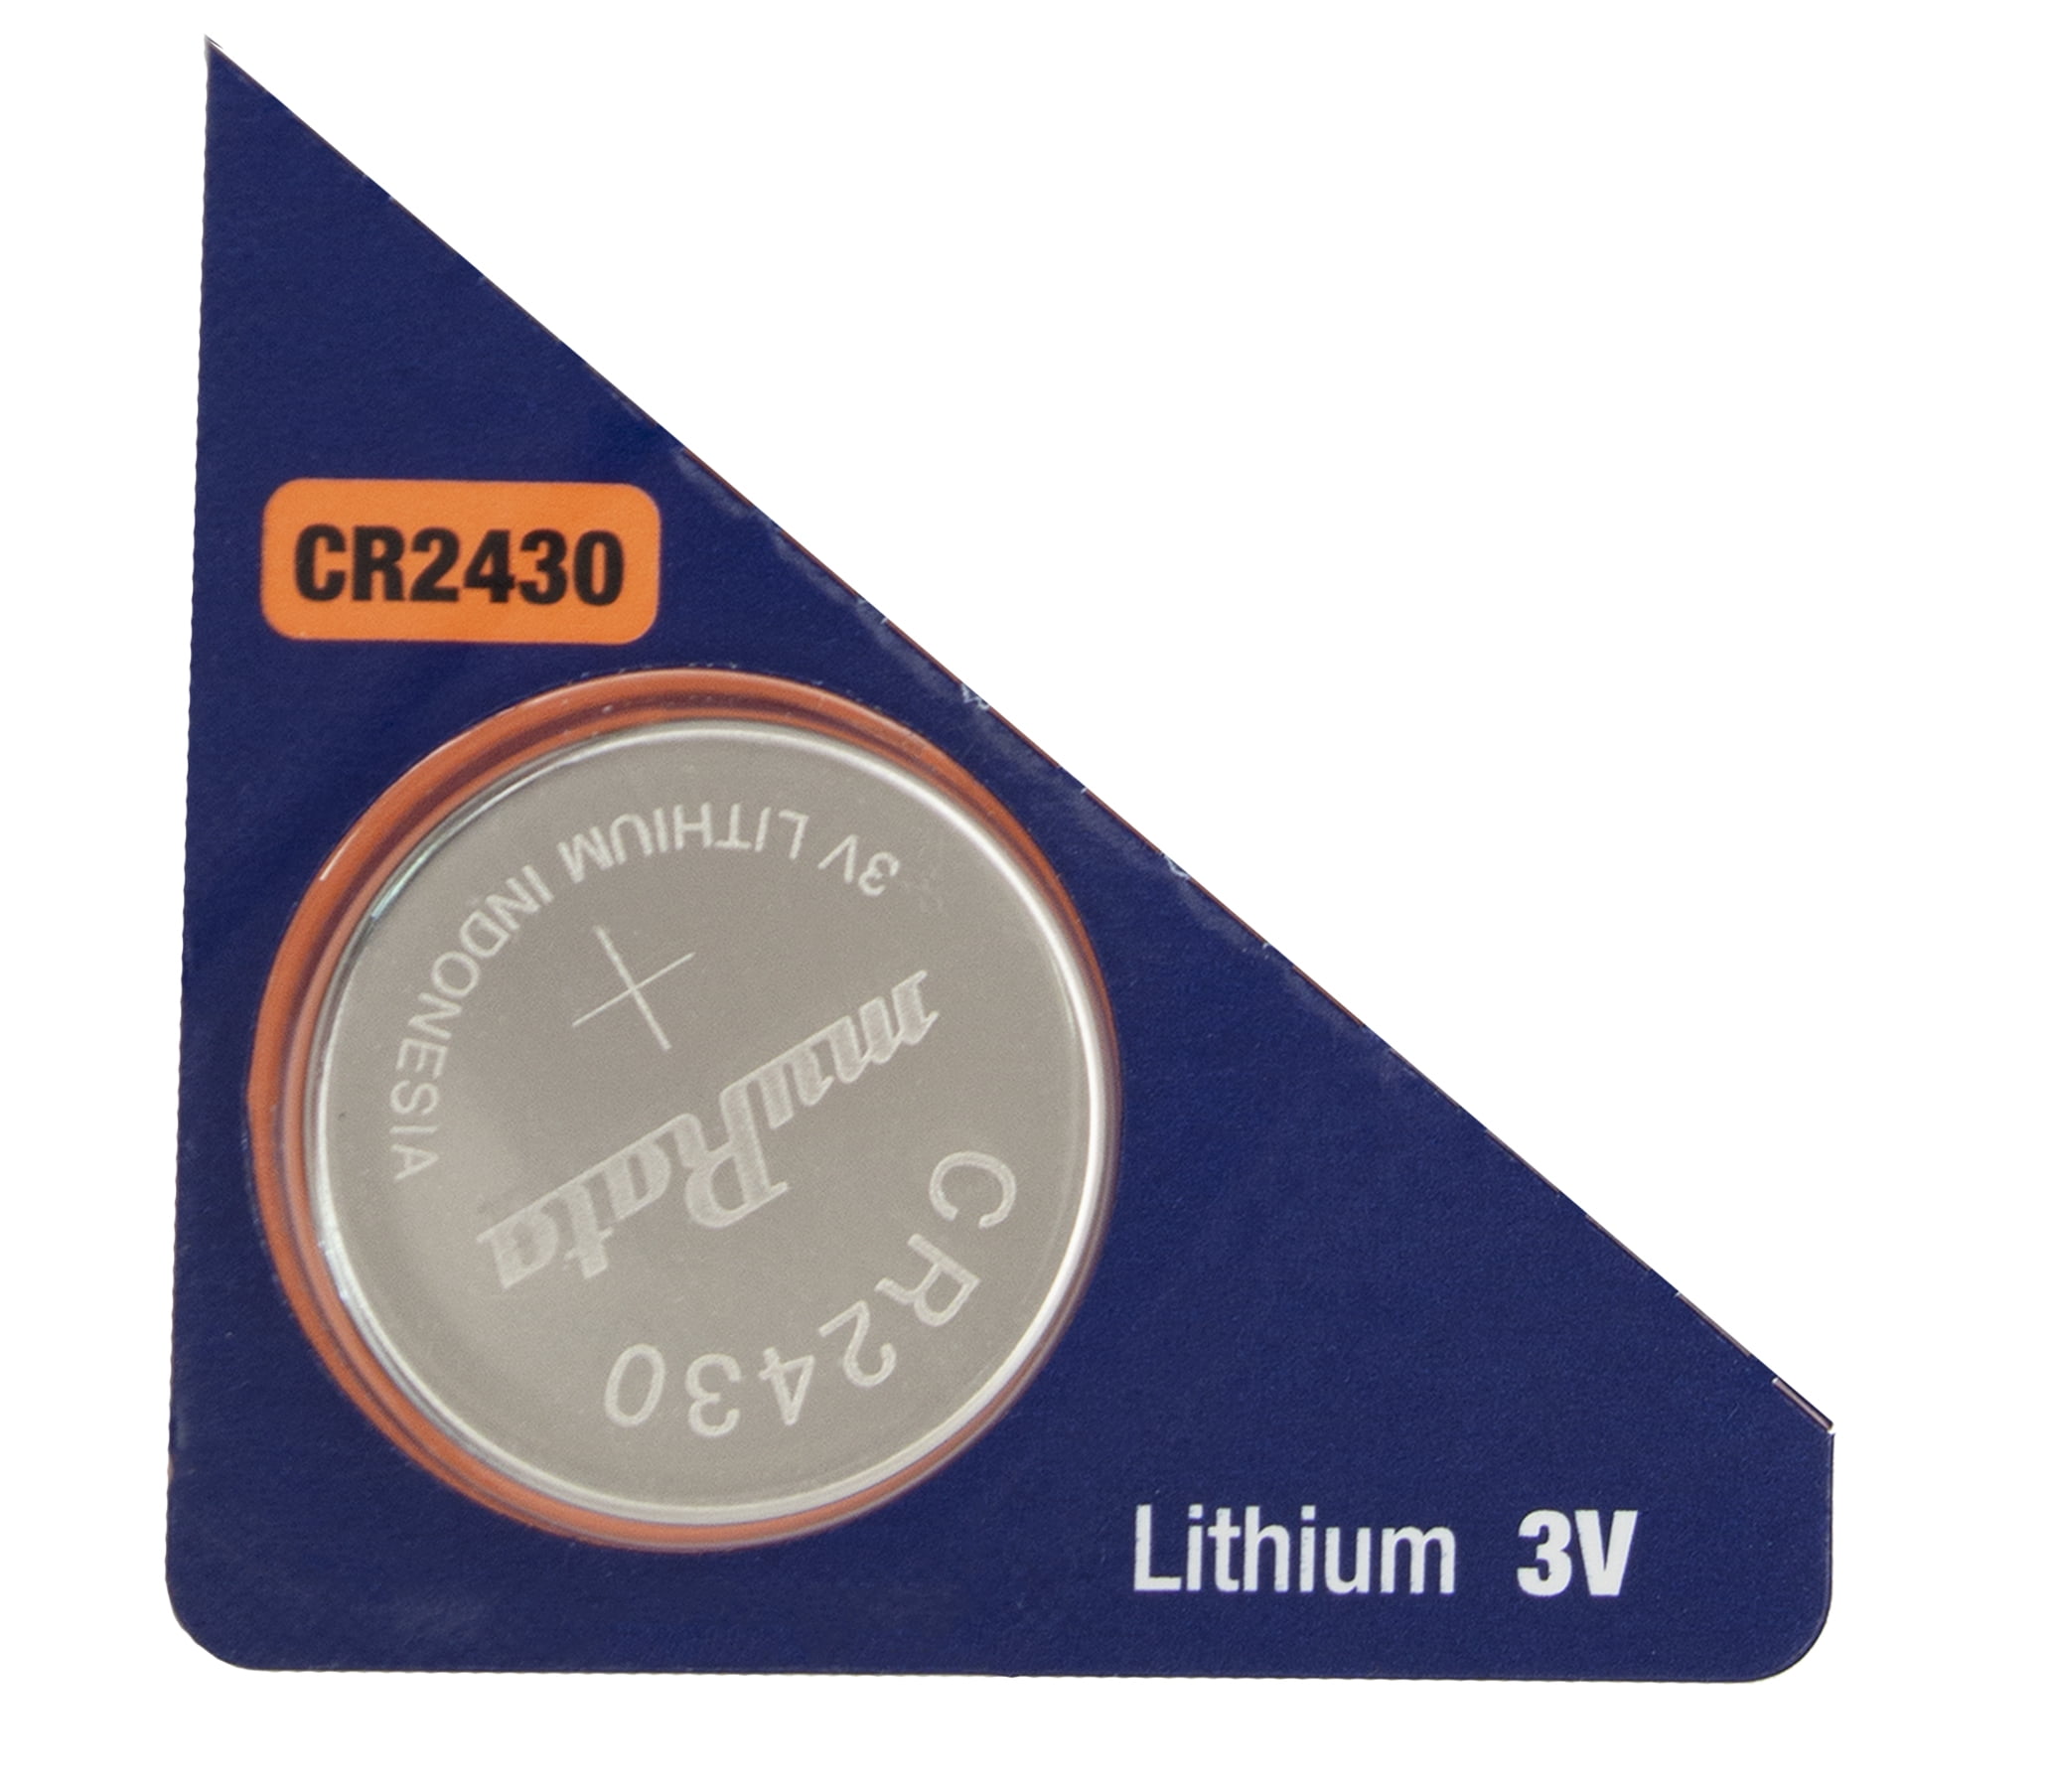 CR1216 Sony/ muRata Lithium Coin Battery